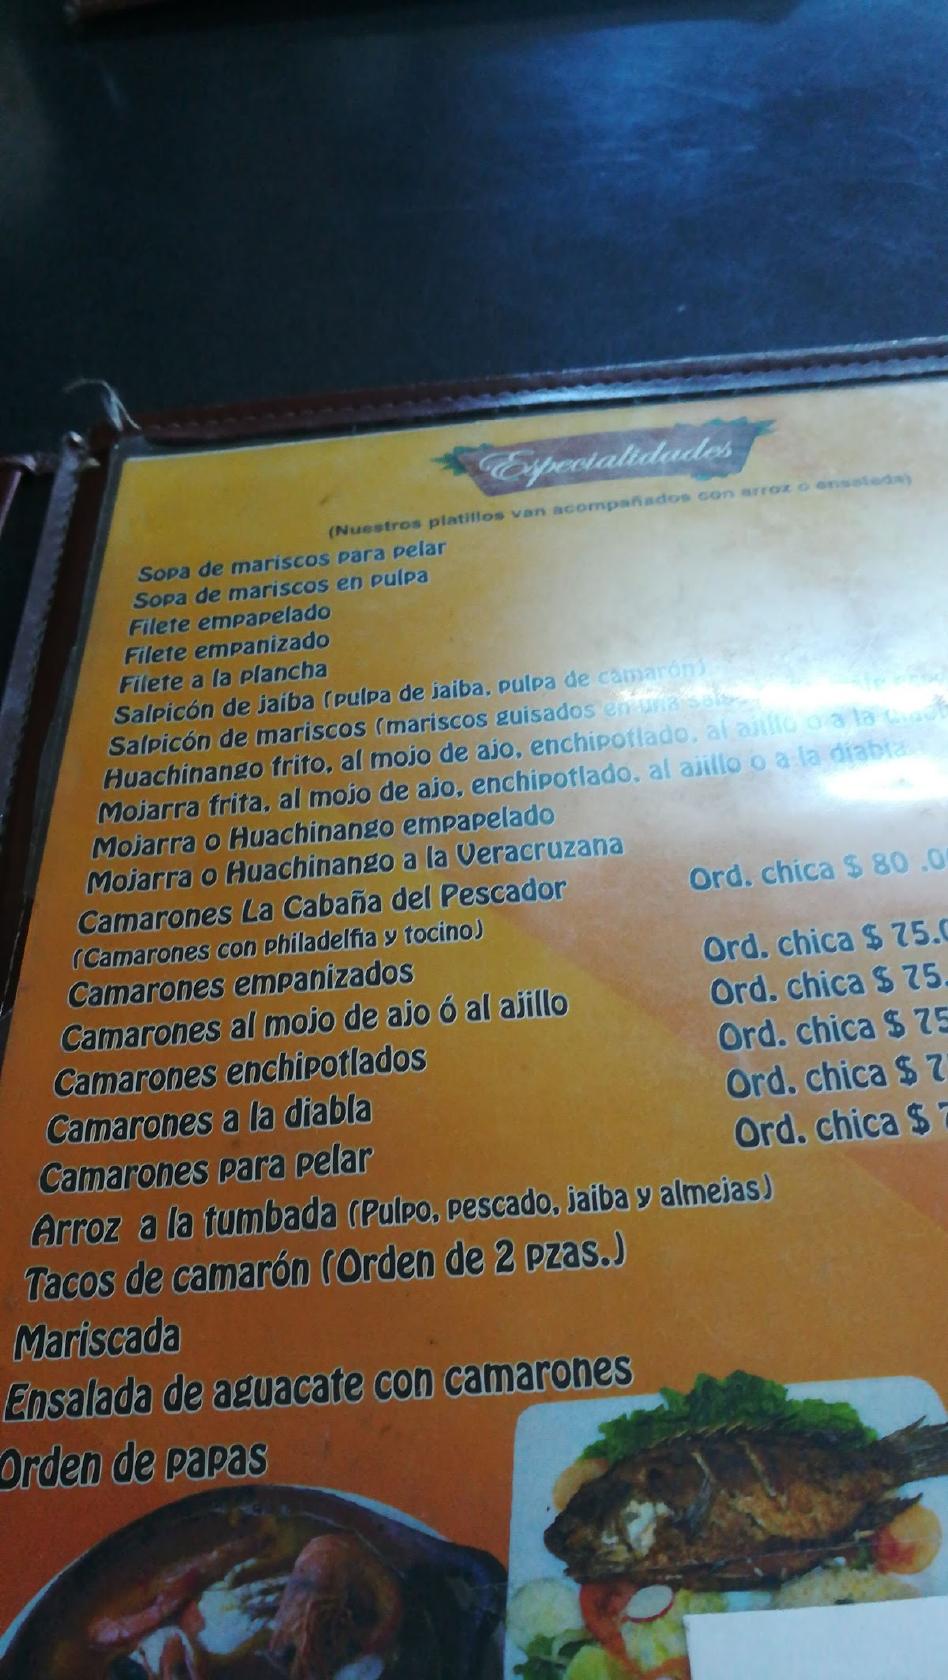 Menu at La Cabaña del Pescador restaurant, Toluca